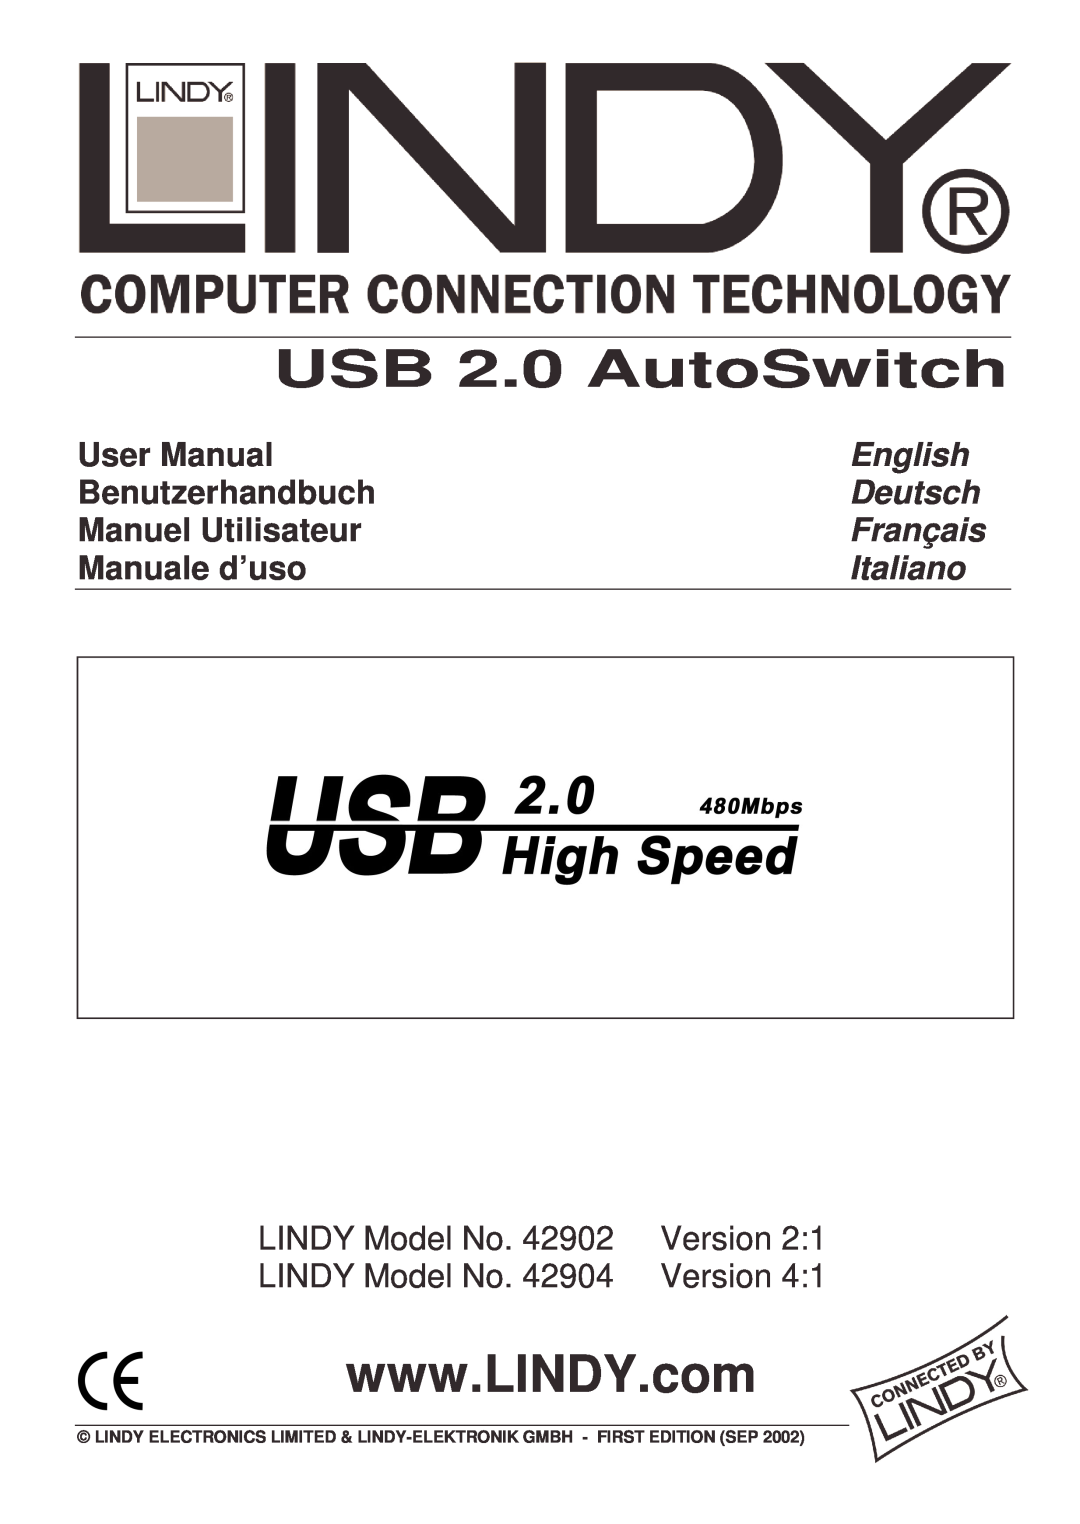 Lindy 42904 user manual English, Deutsch, Français, Italiano, USB 2.0 AutoSwitch, User Manual, Benutzerhandbuch, Version 